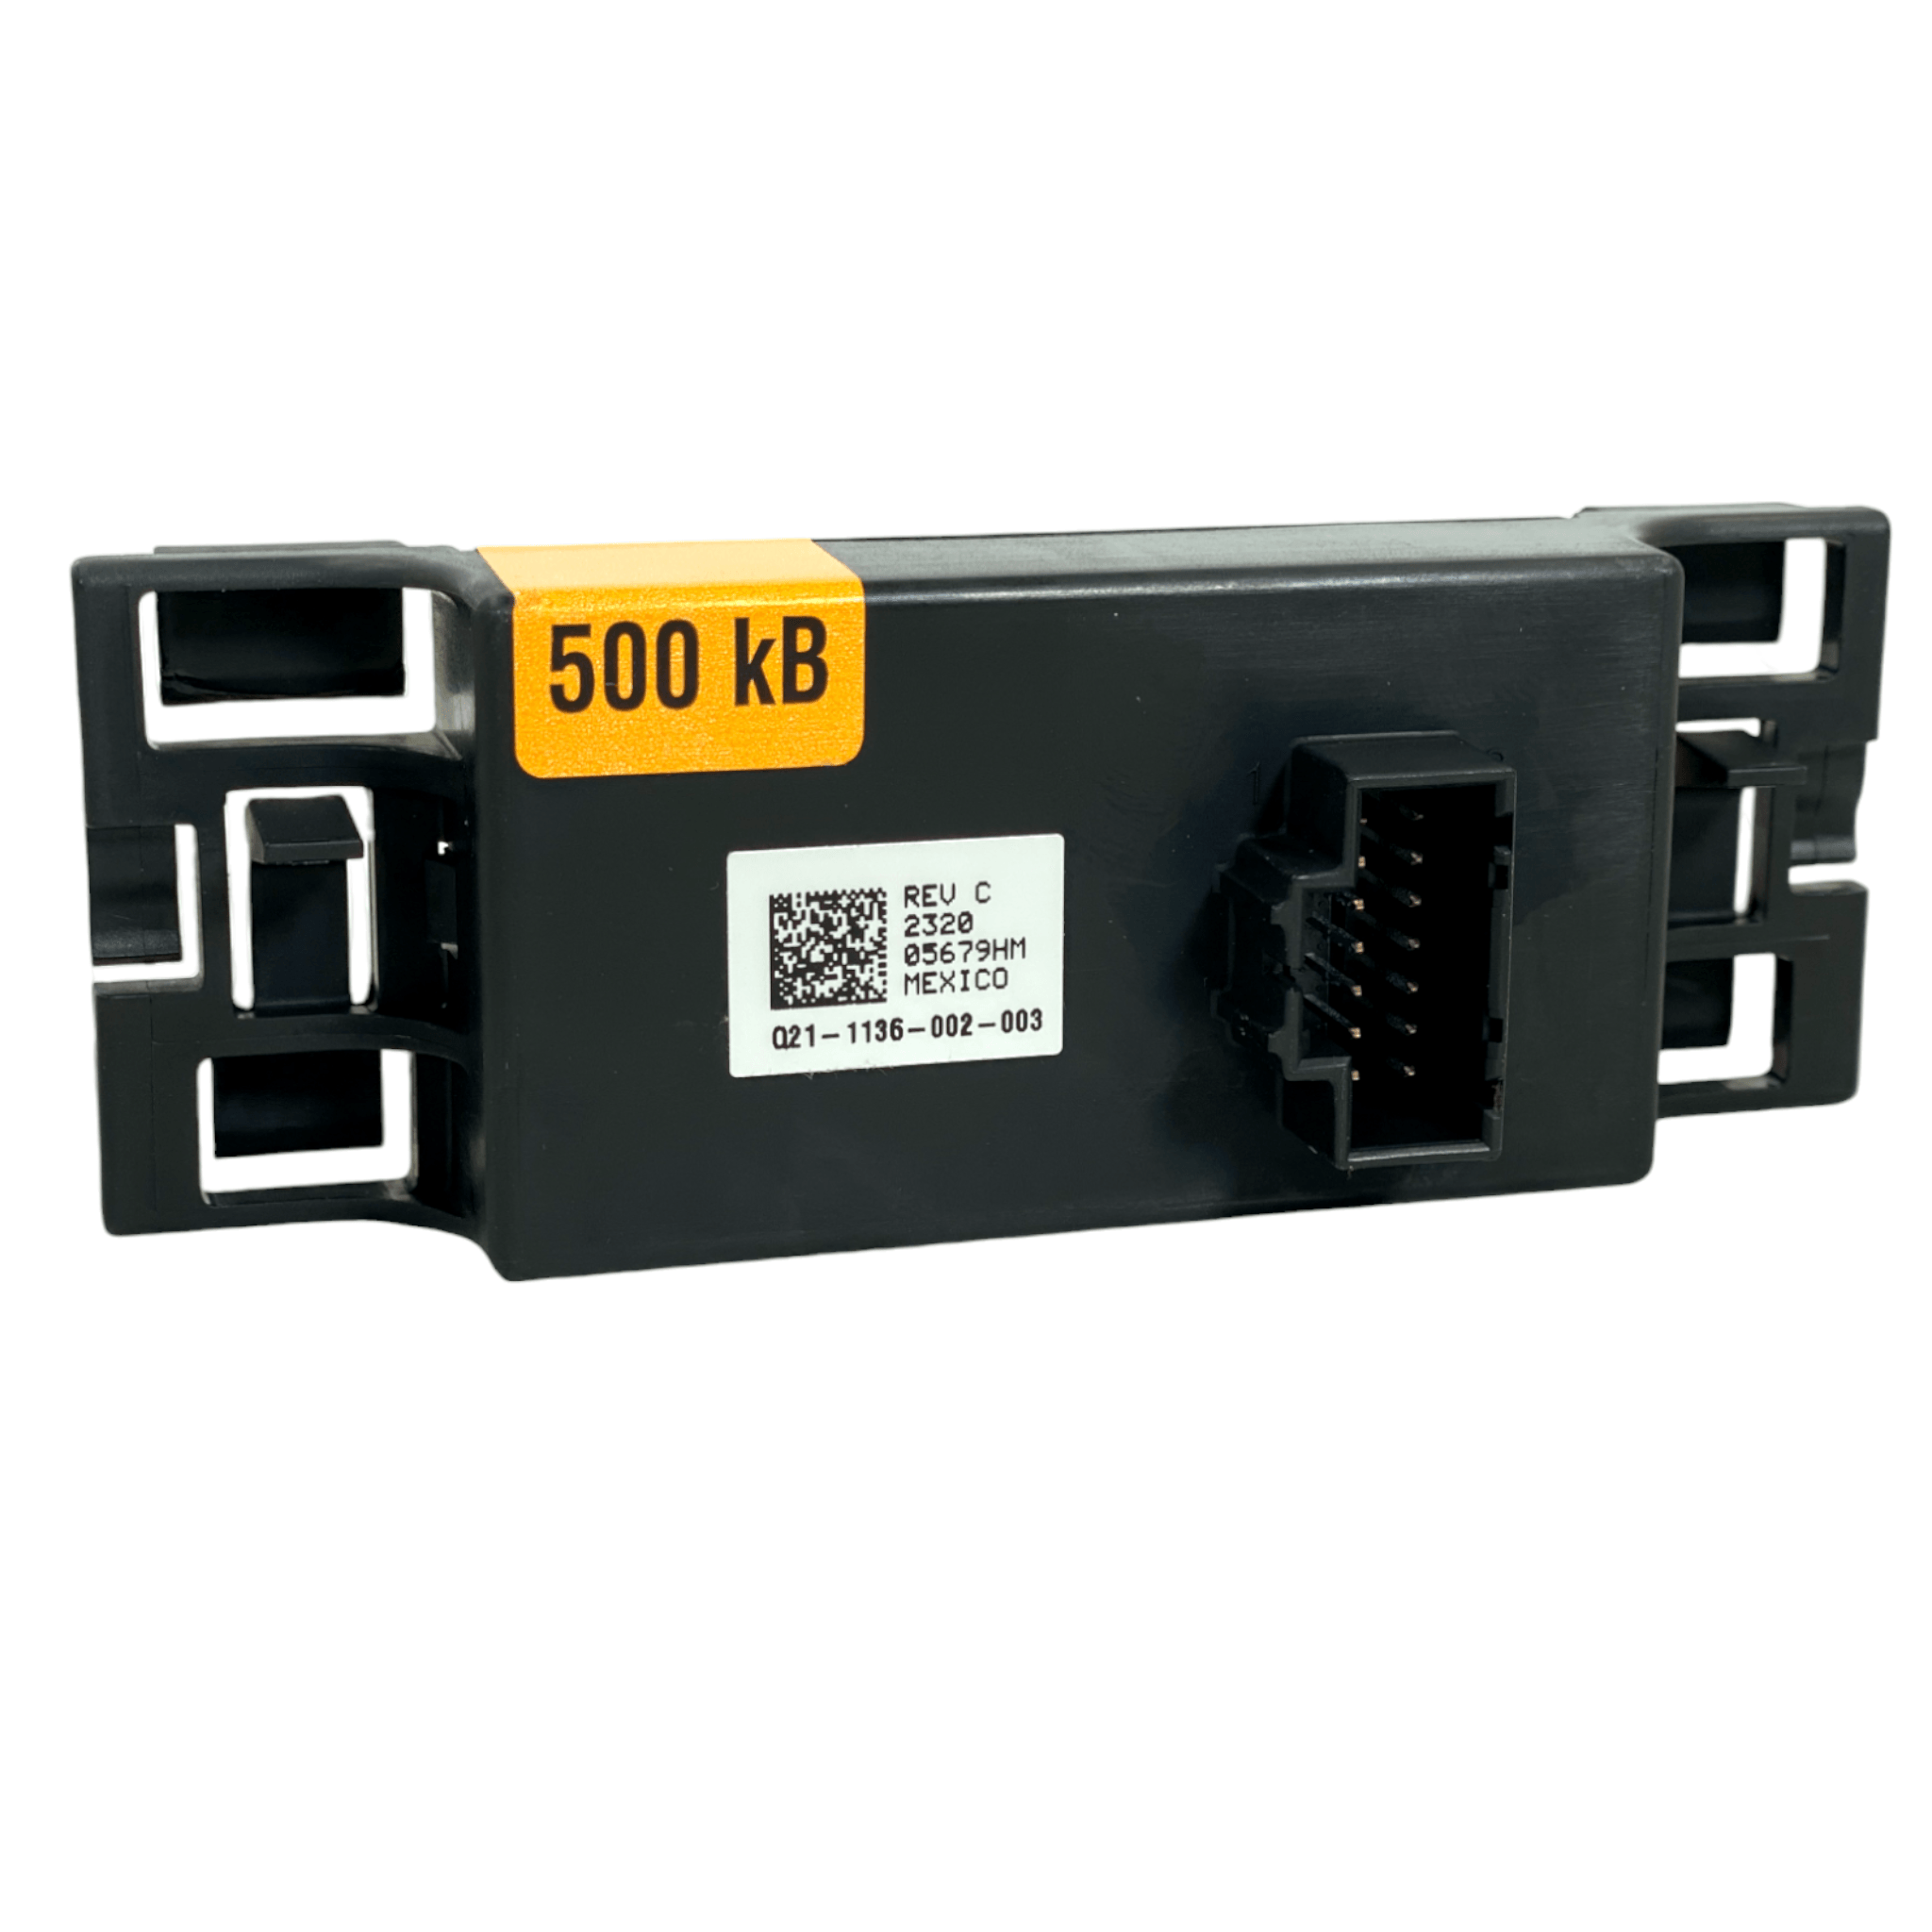 Q21-1136-002-003 Genuine Peterbilt Master Switch Control Module